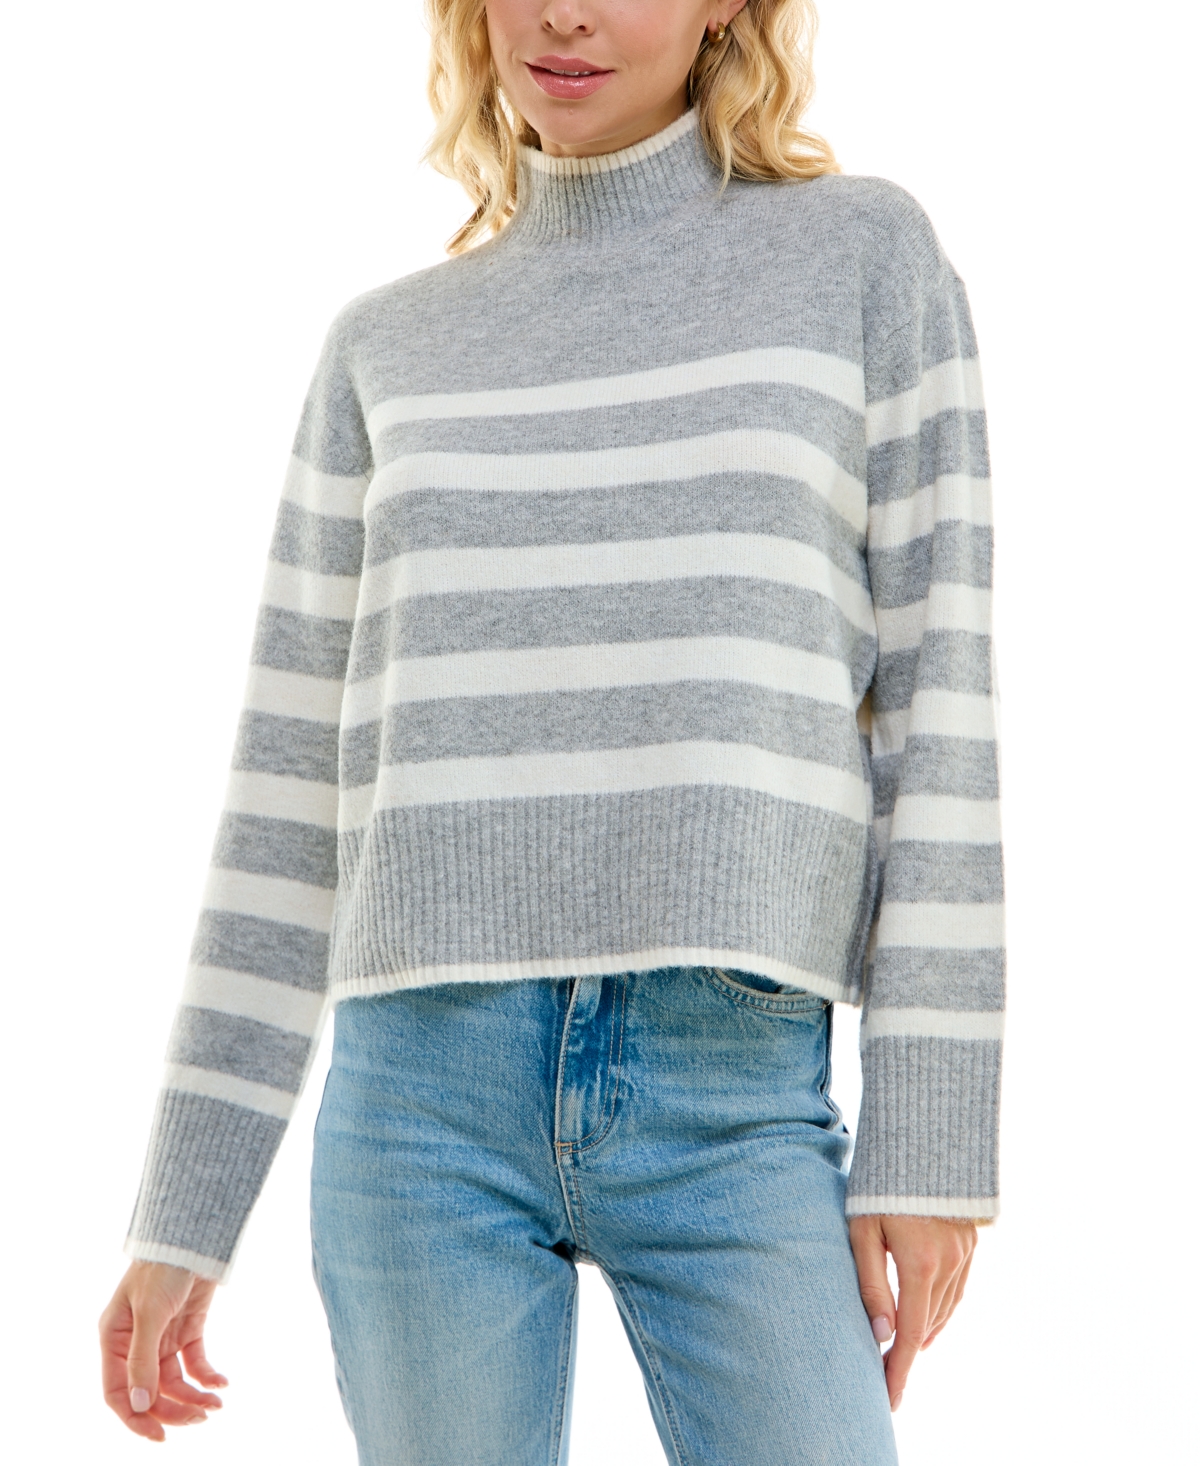 Juniors' Striped Mock-Turtleneck Sweater - Peachskin/Gardenia